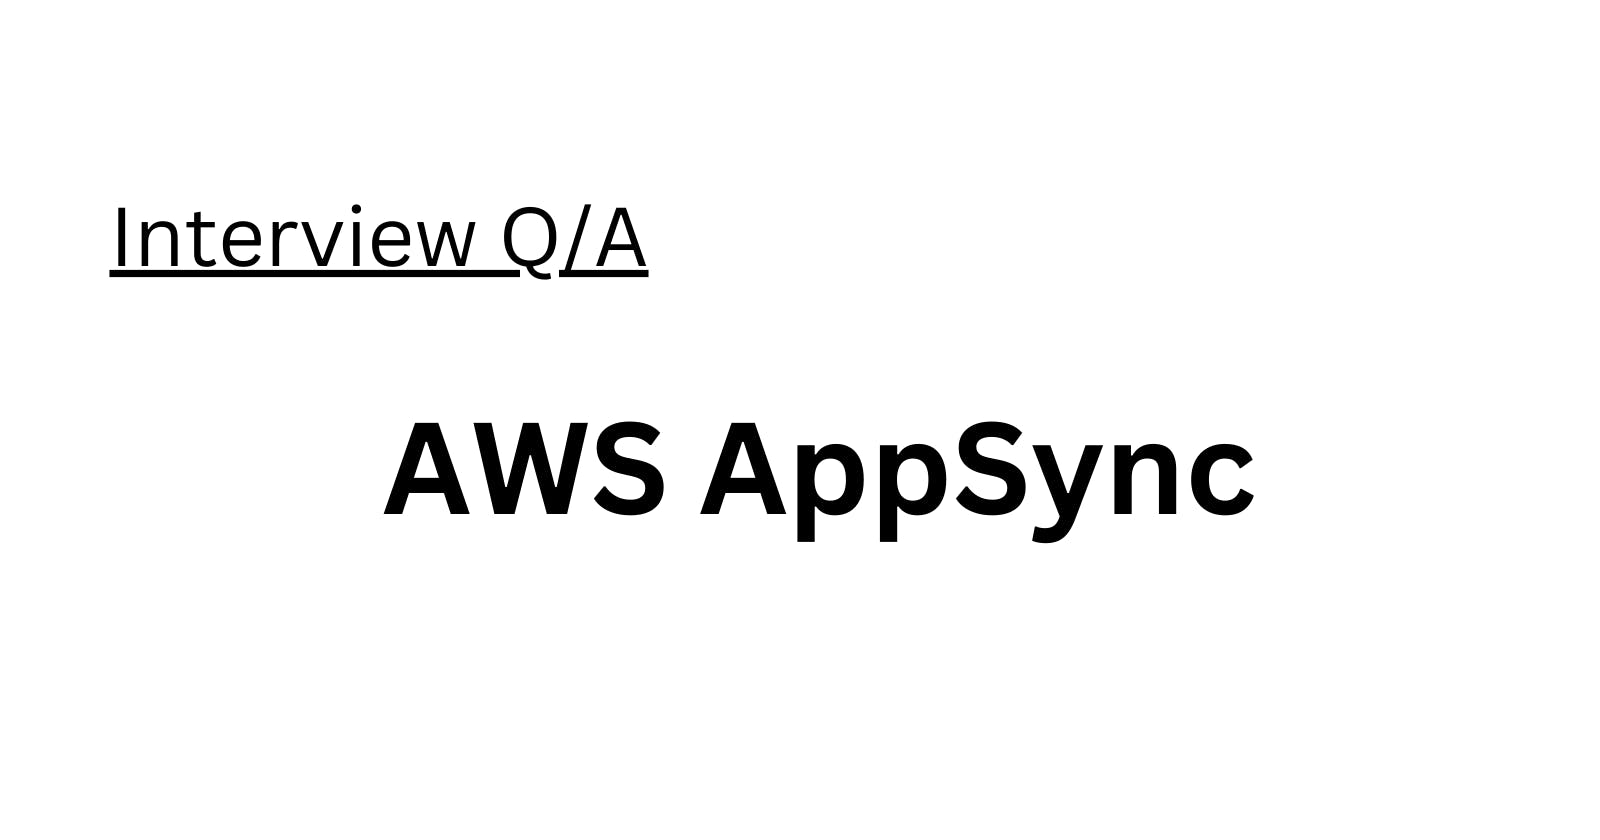 AWS AppSync Interview Q/A